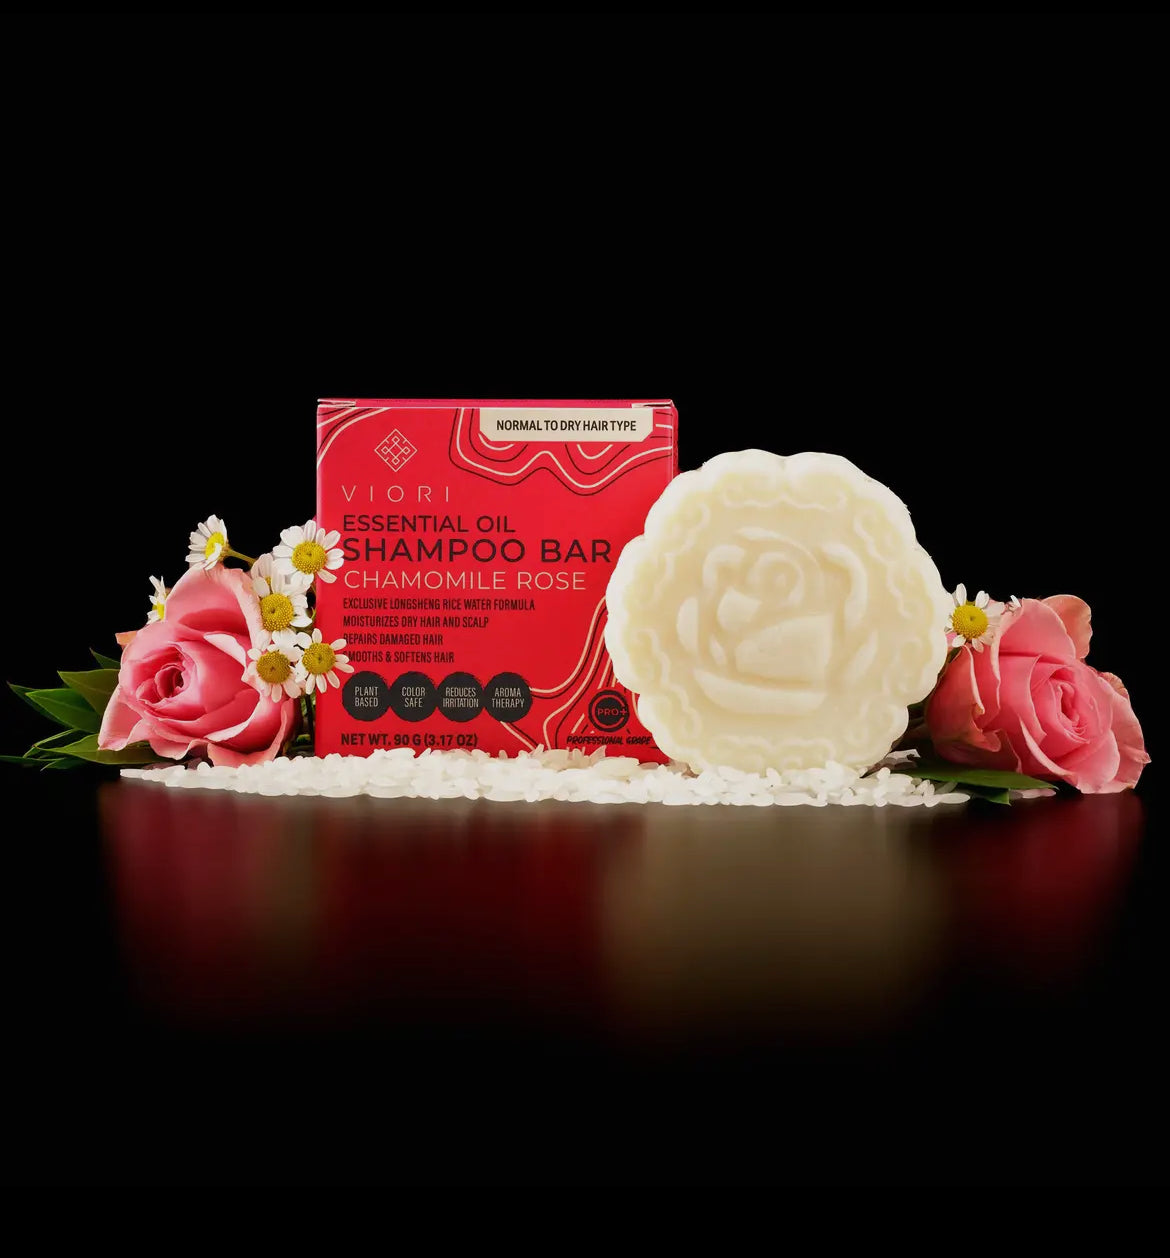 Chamomile Rose Essential Oil Shampoo Bar